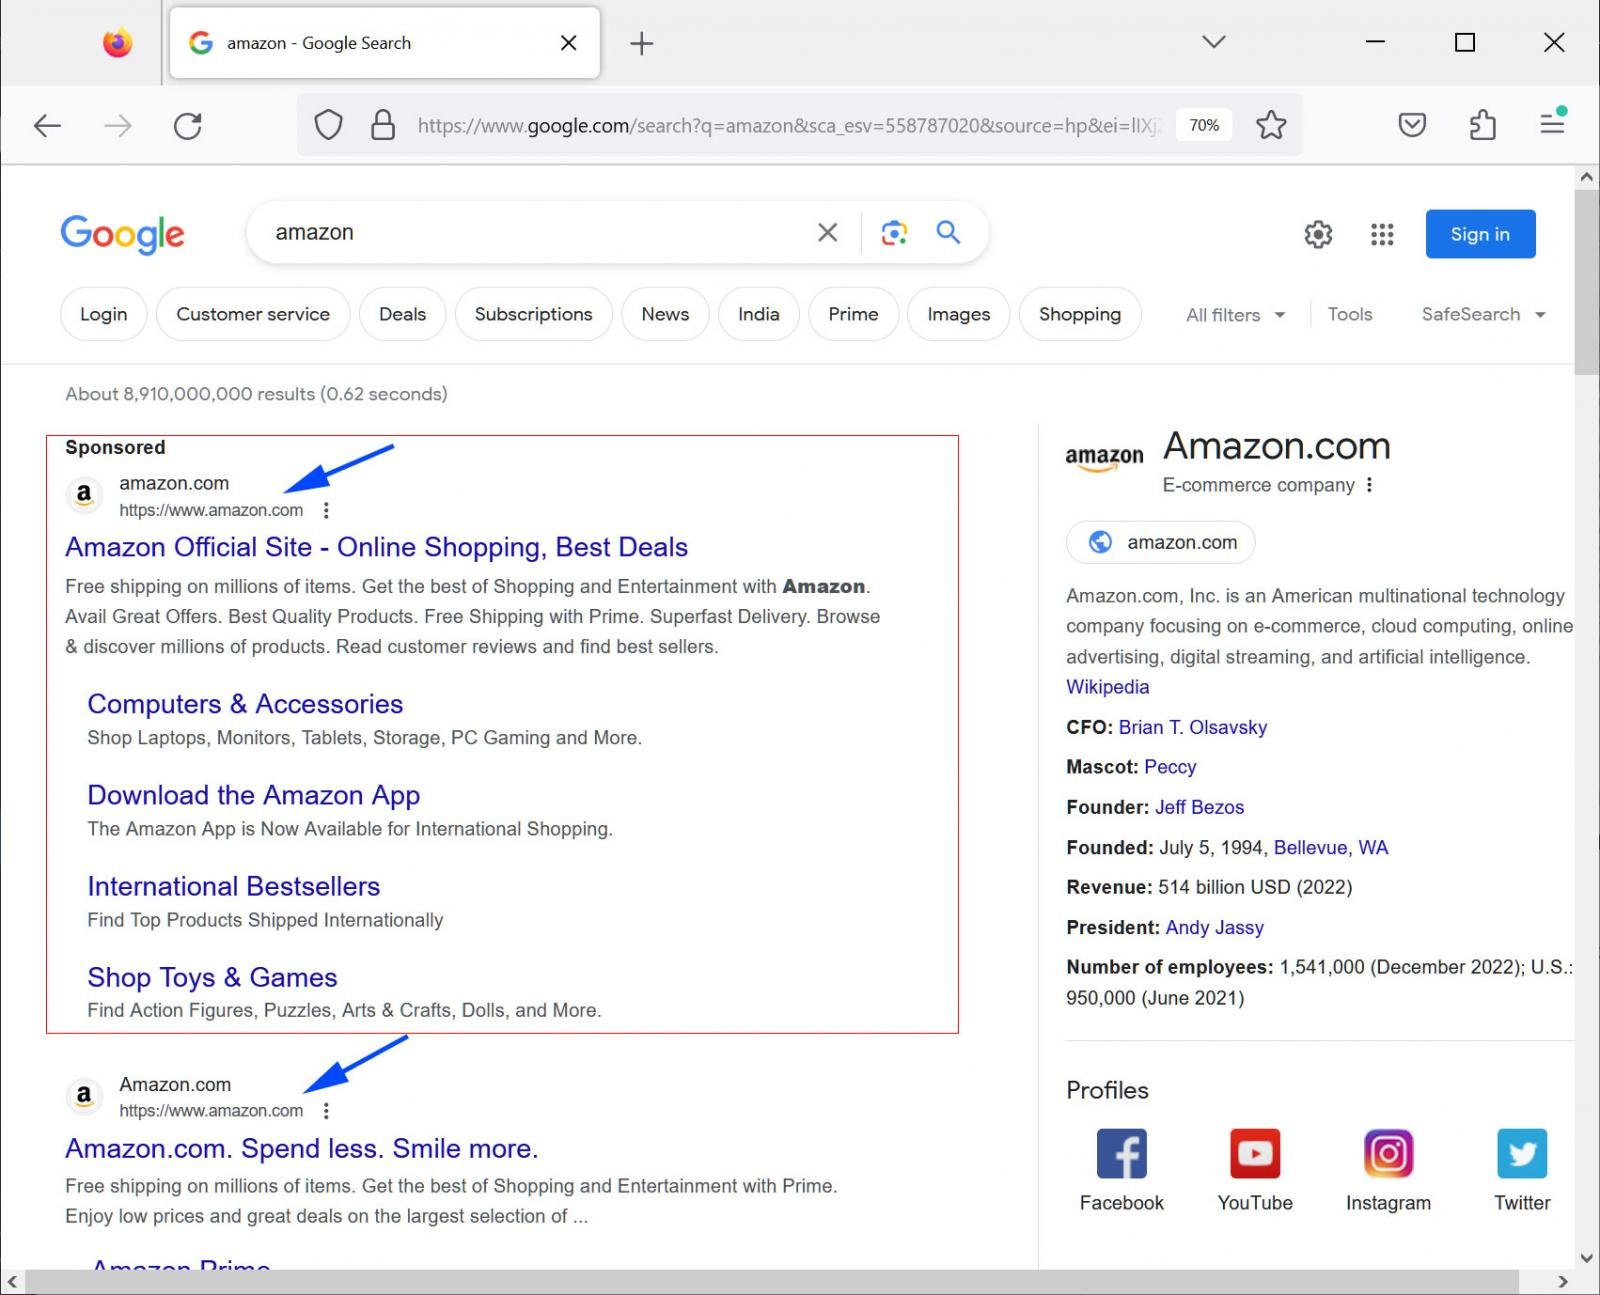 Fake Amazon ad in Google search results